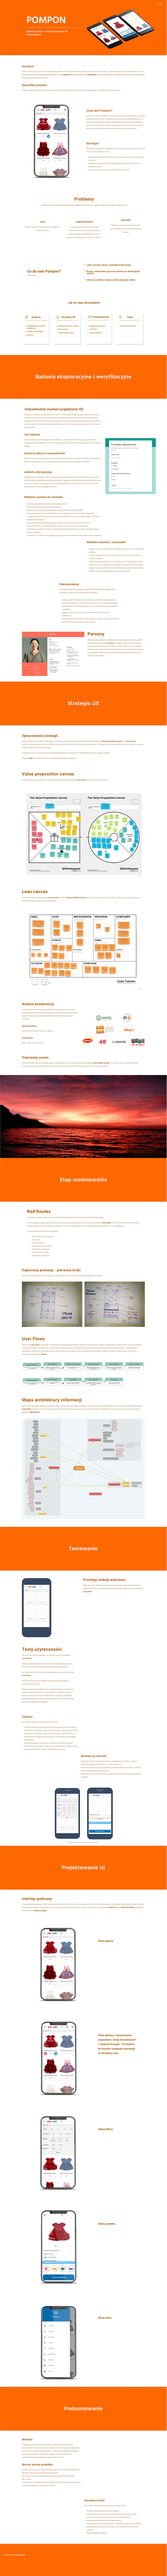 ux UI axure Adobe XD Prototyp design Web mobile Case Study portfolio